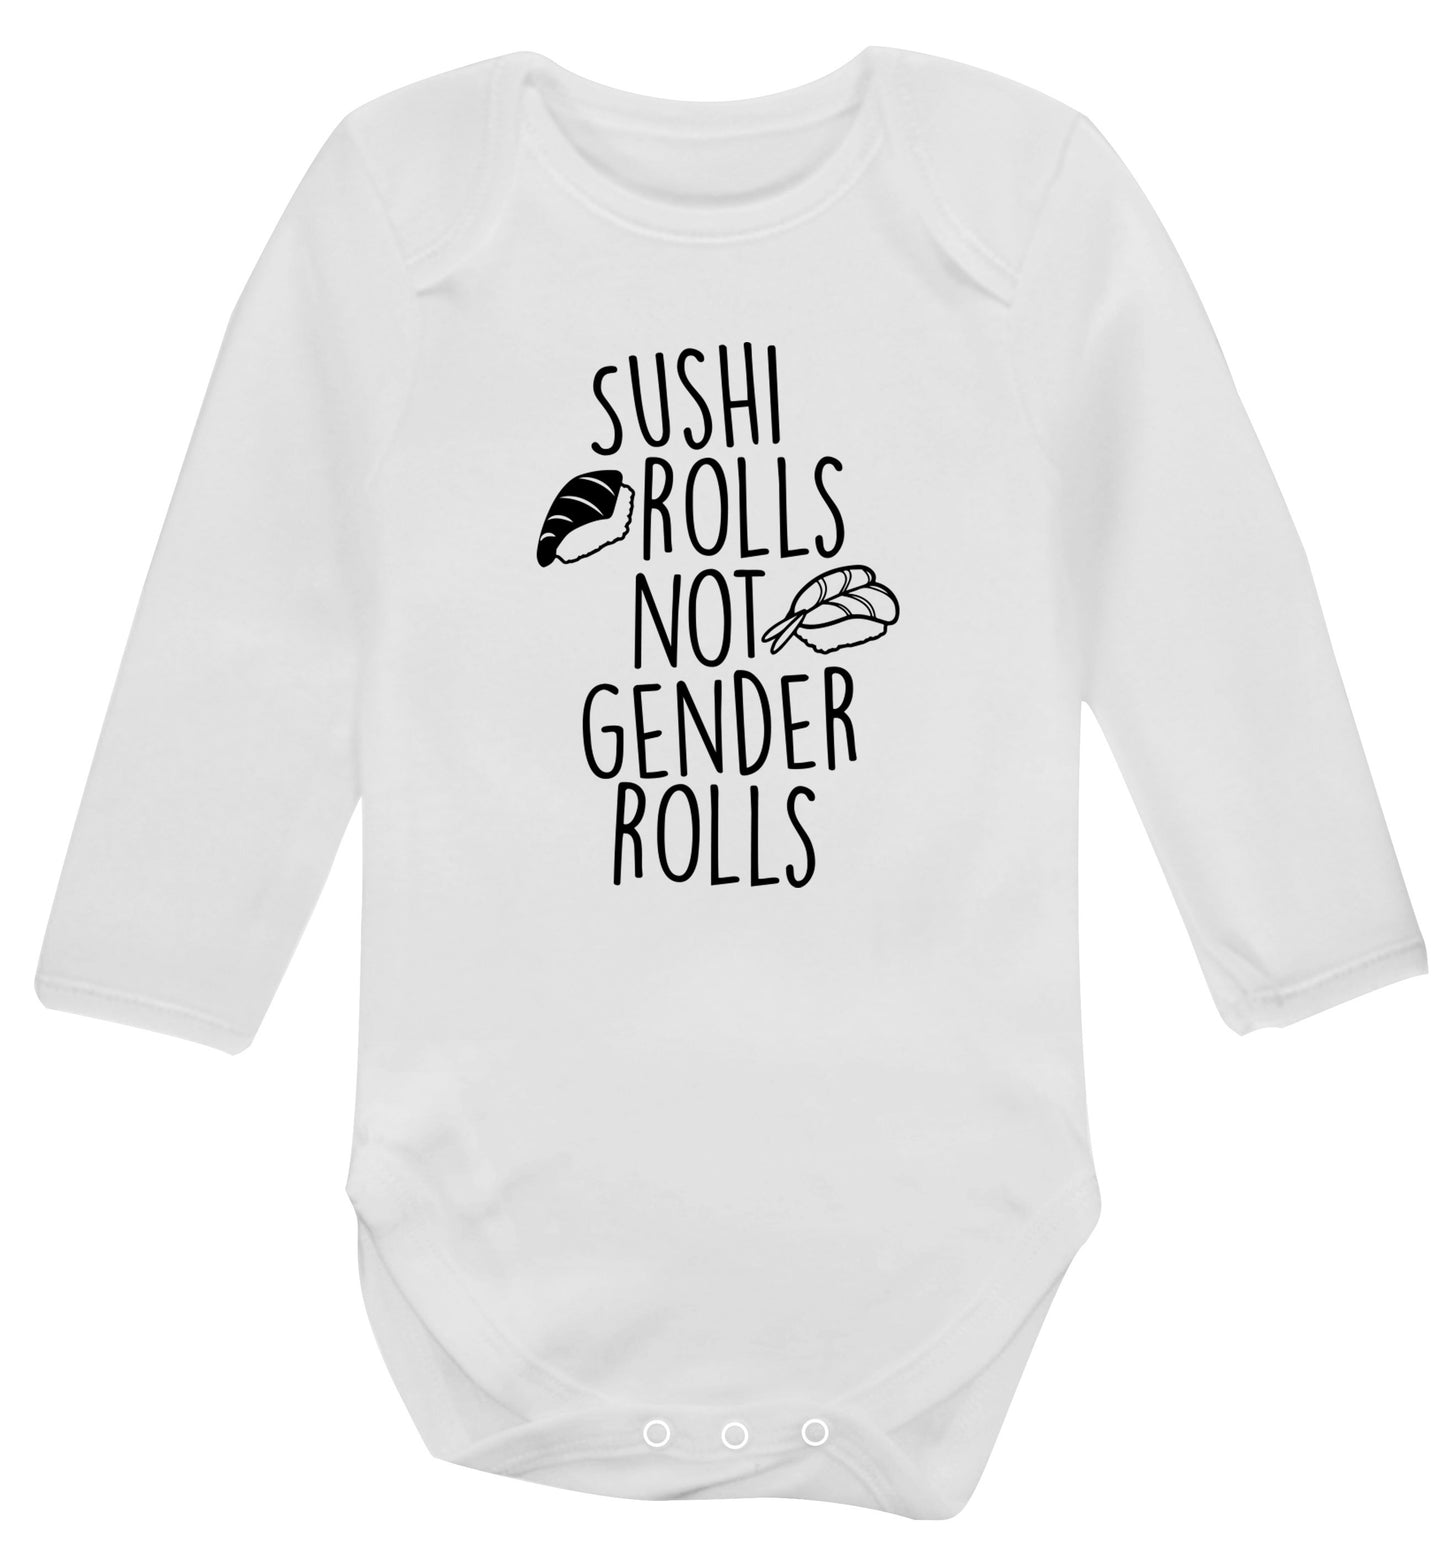 Sushi rolls not gender rolls Baby Vest long sleeved white 6-12 months